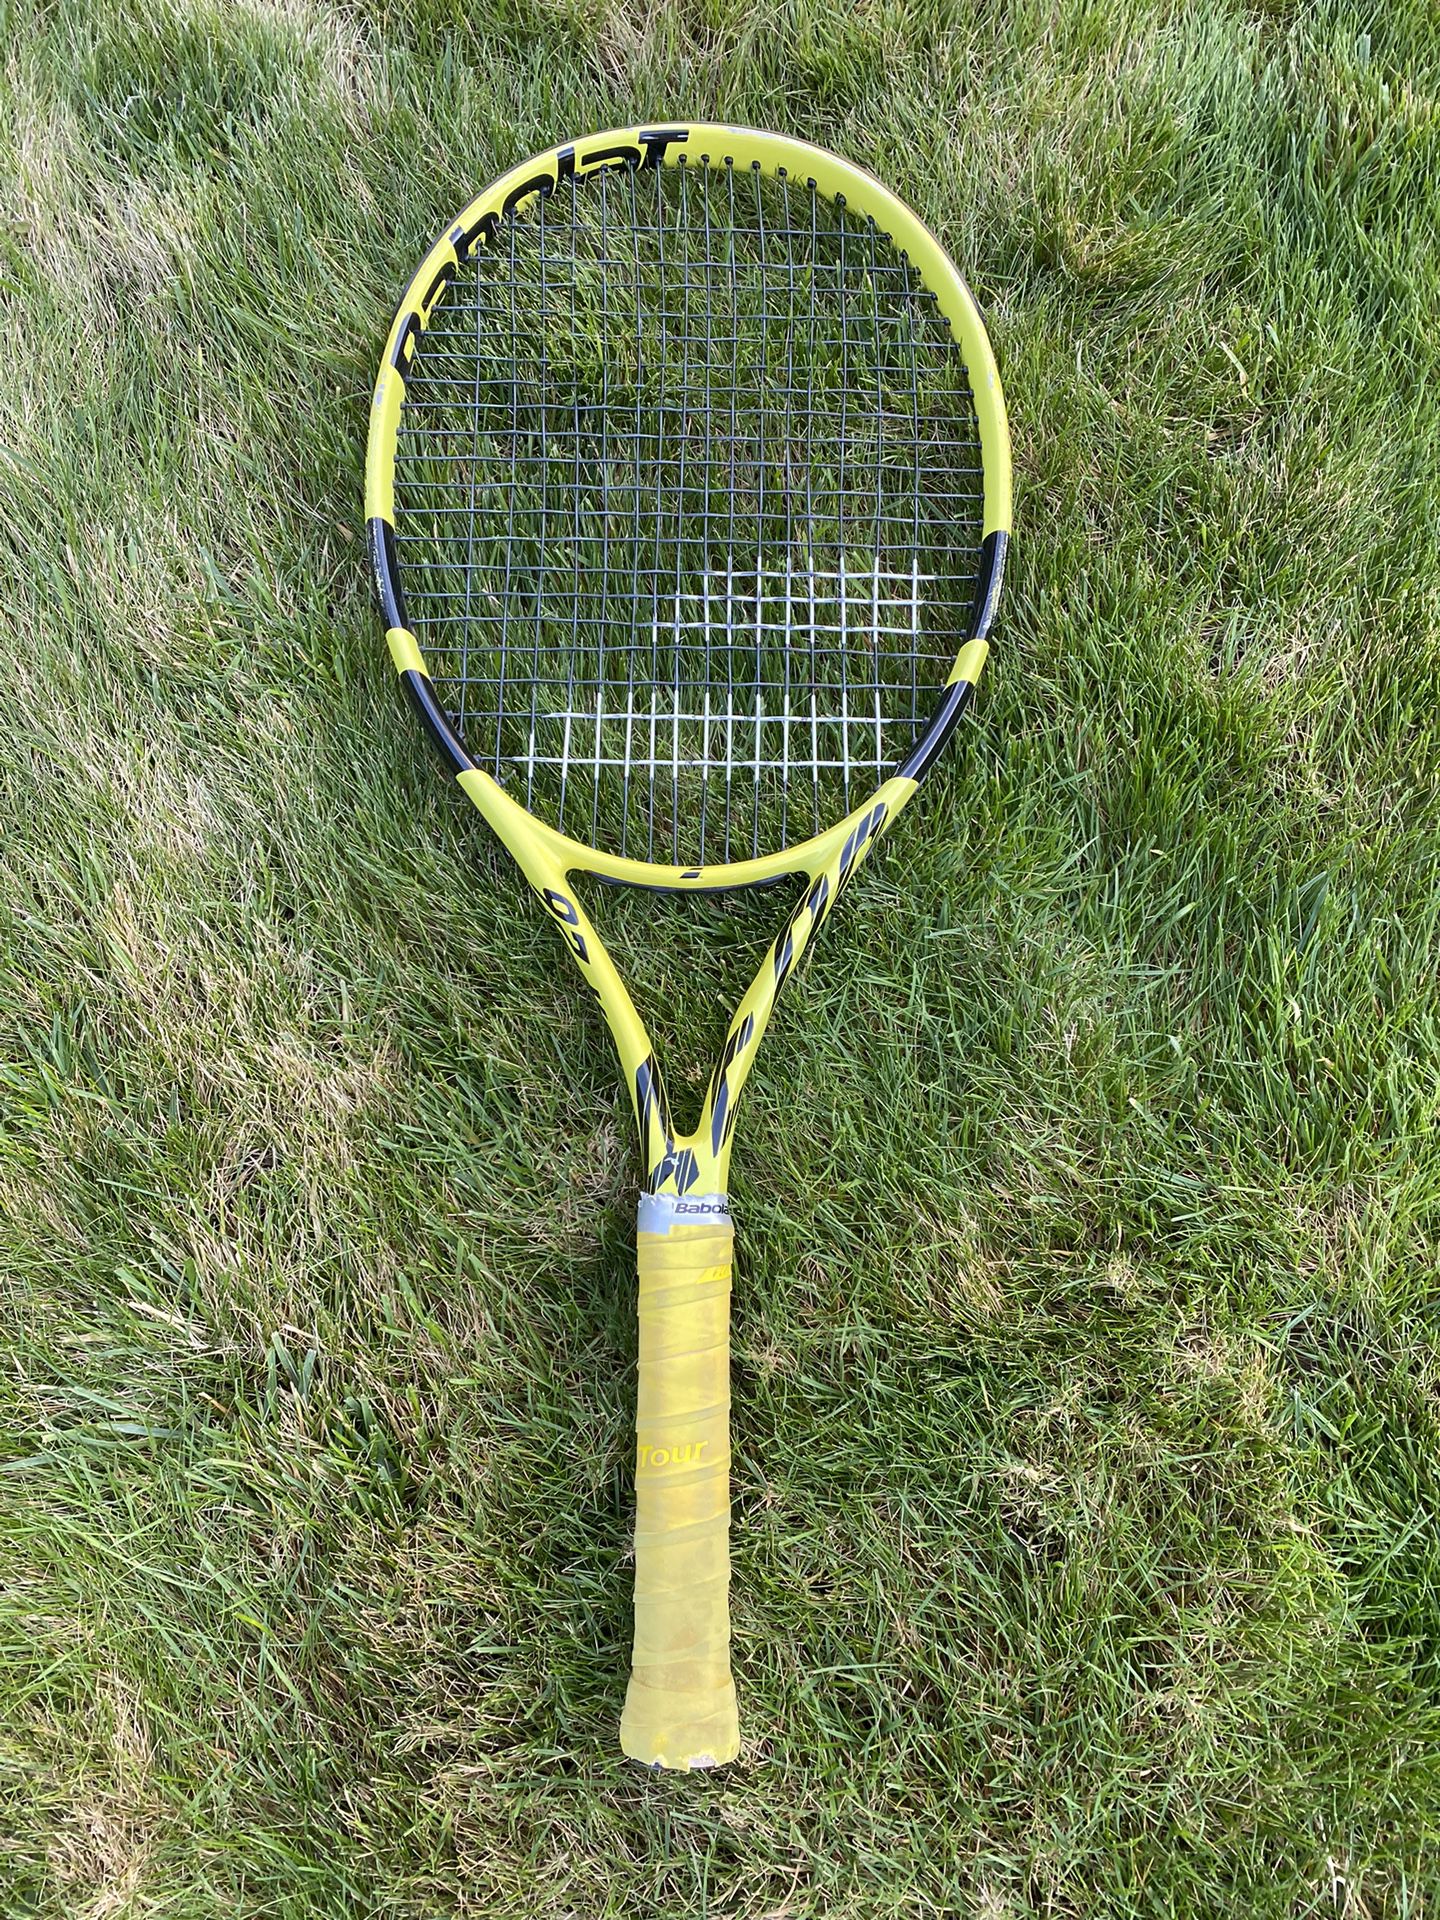 Babolat Aero Jr 26 Tennis Racket Racquet 